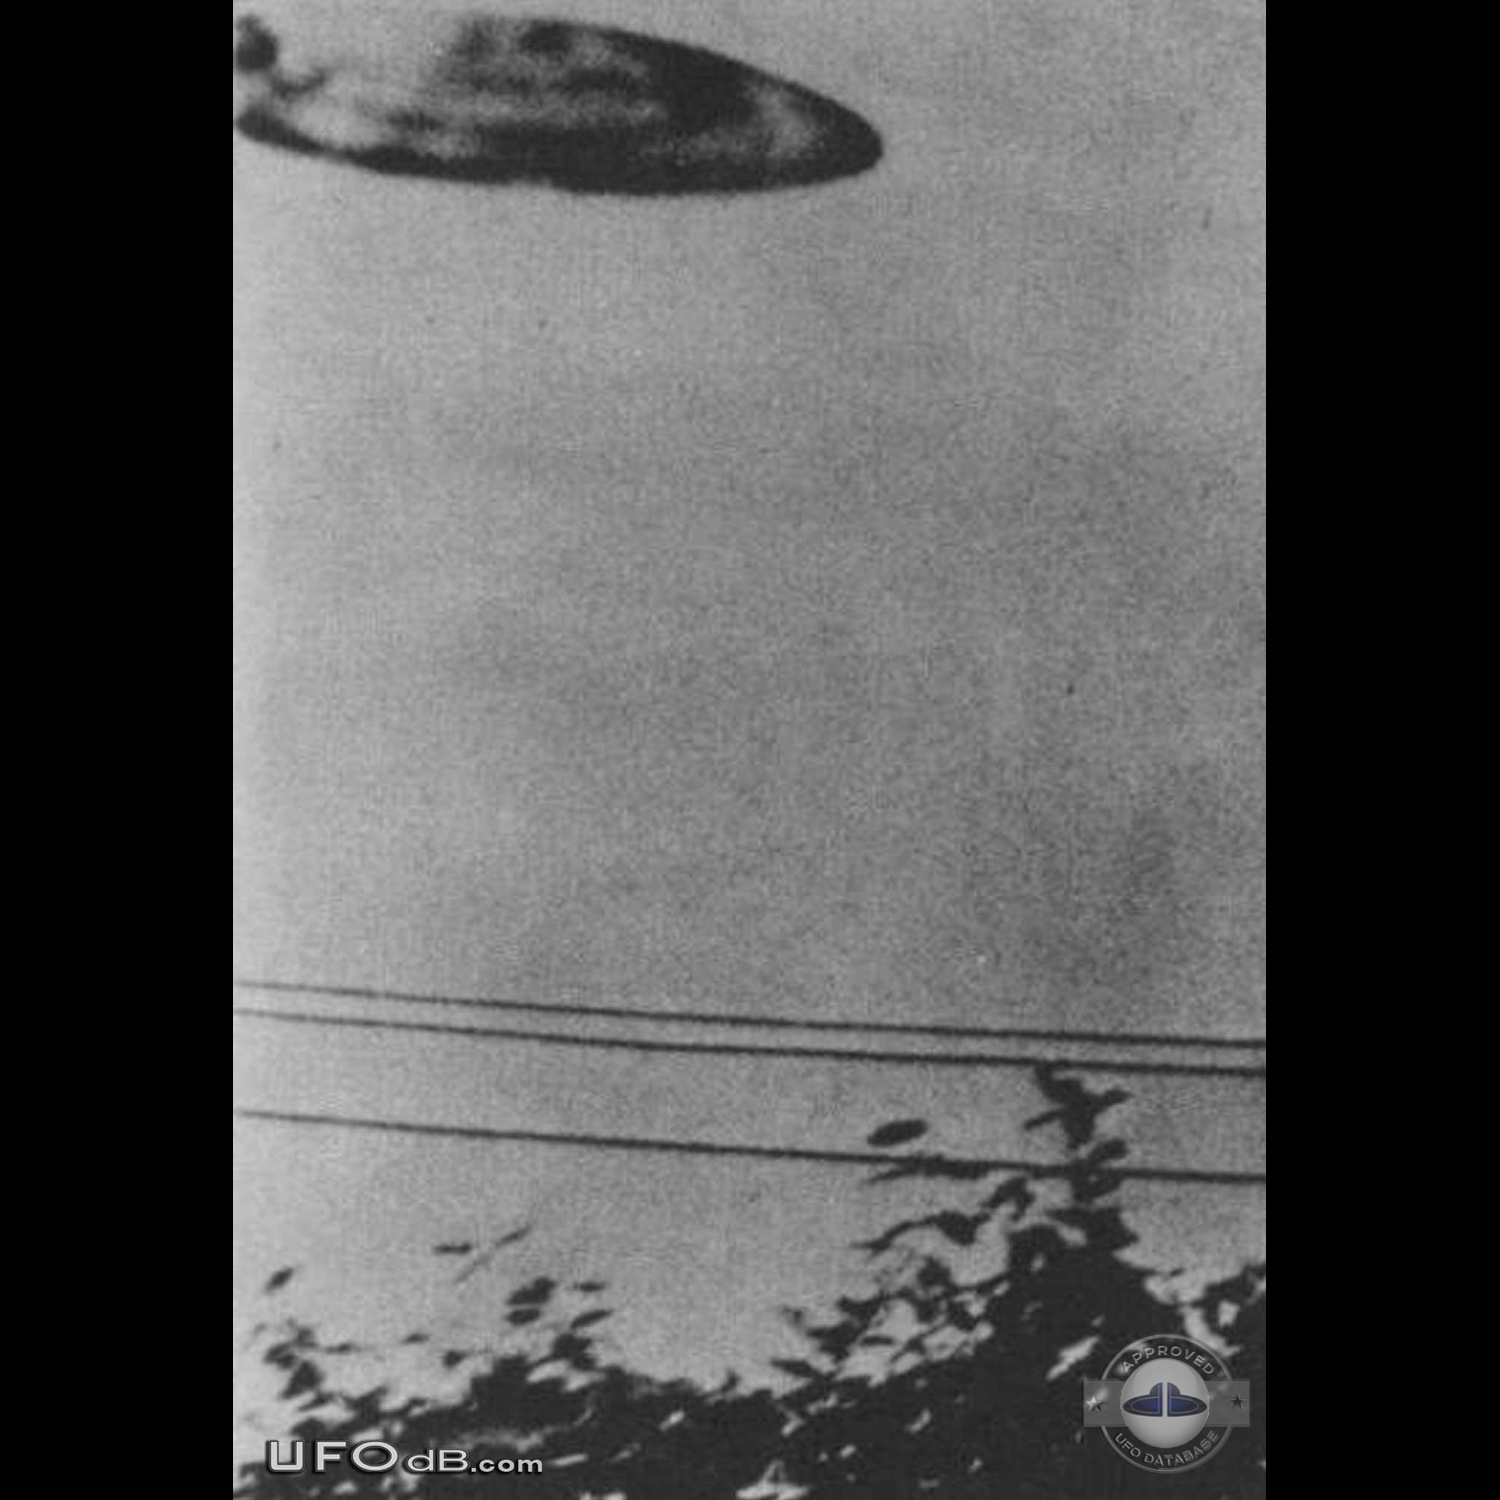 1950 Saucer UFO San Bernardino California USA caught on picture UFO Picture #433-1